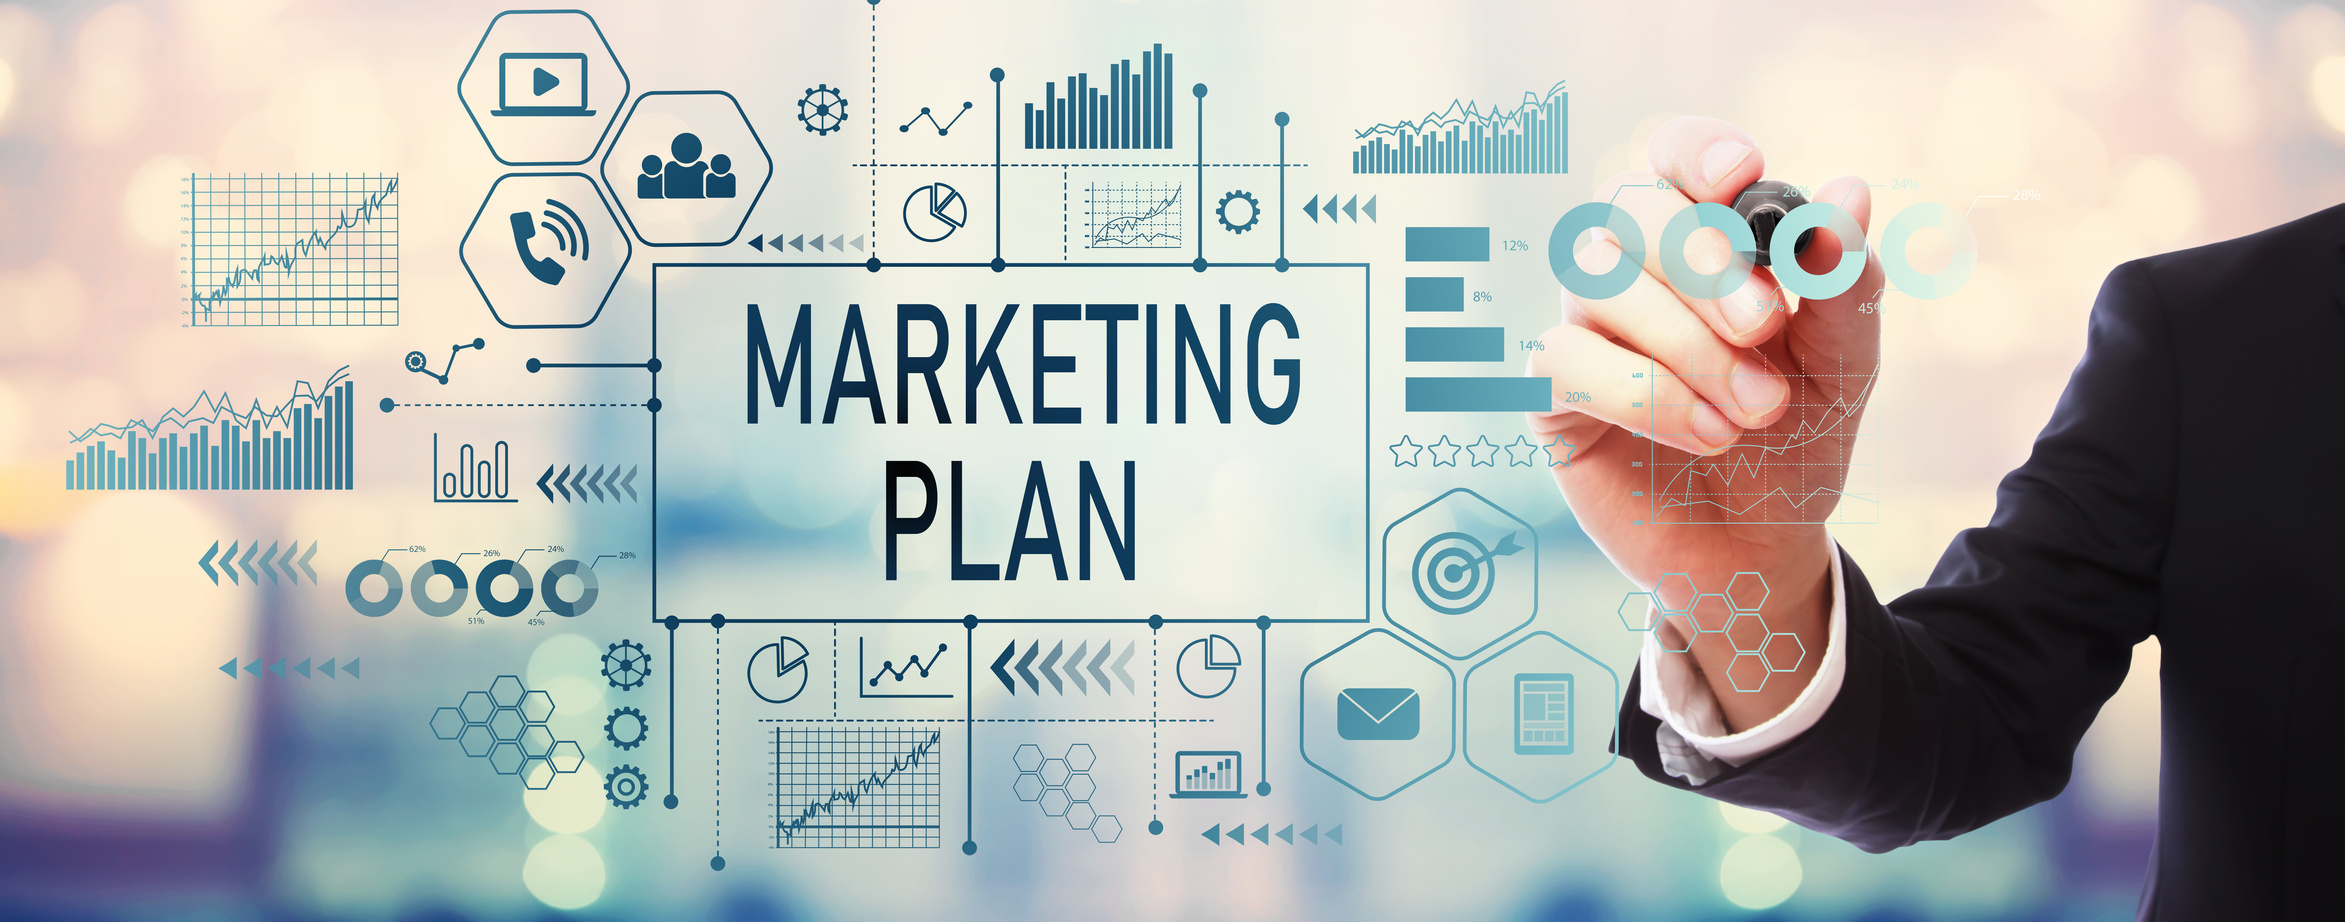 Marketing plan with businessman